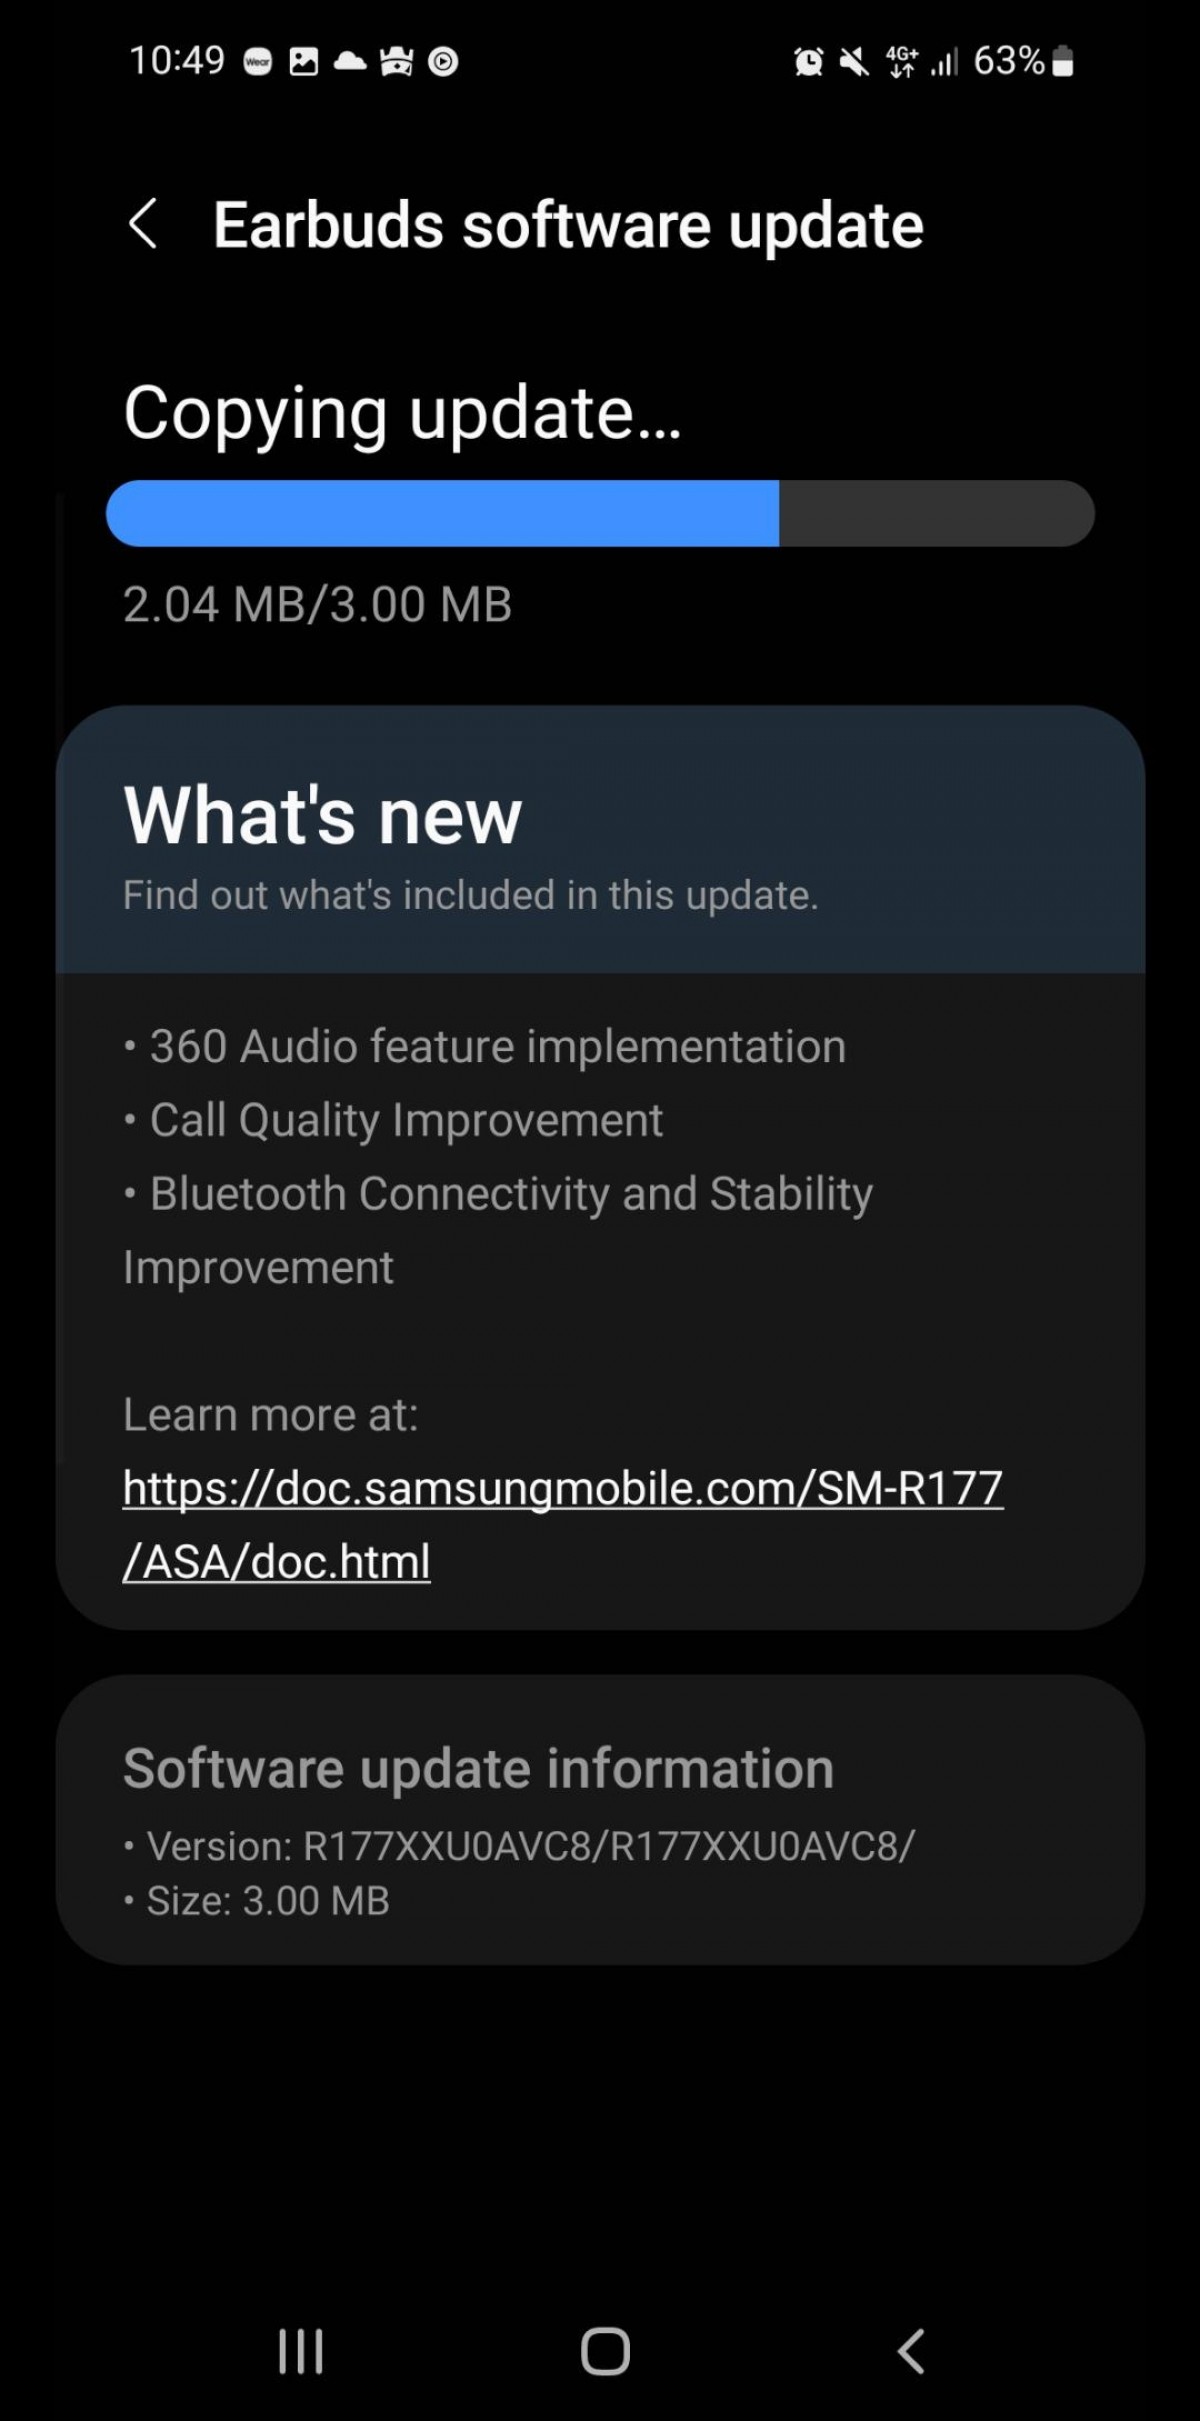 Samsung Galaxy Buds 2 gets 360 Audio in new software update